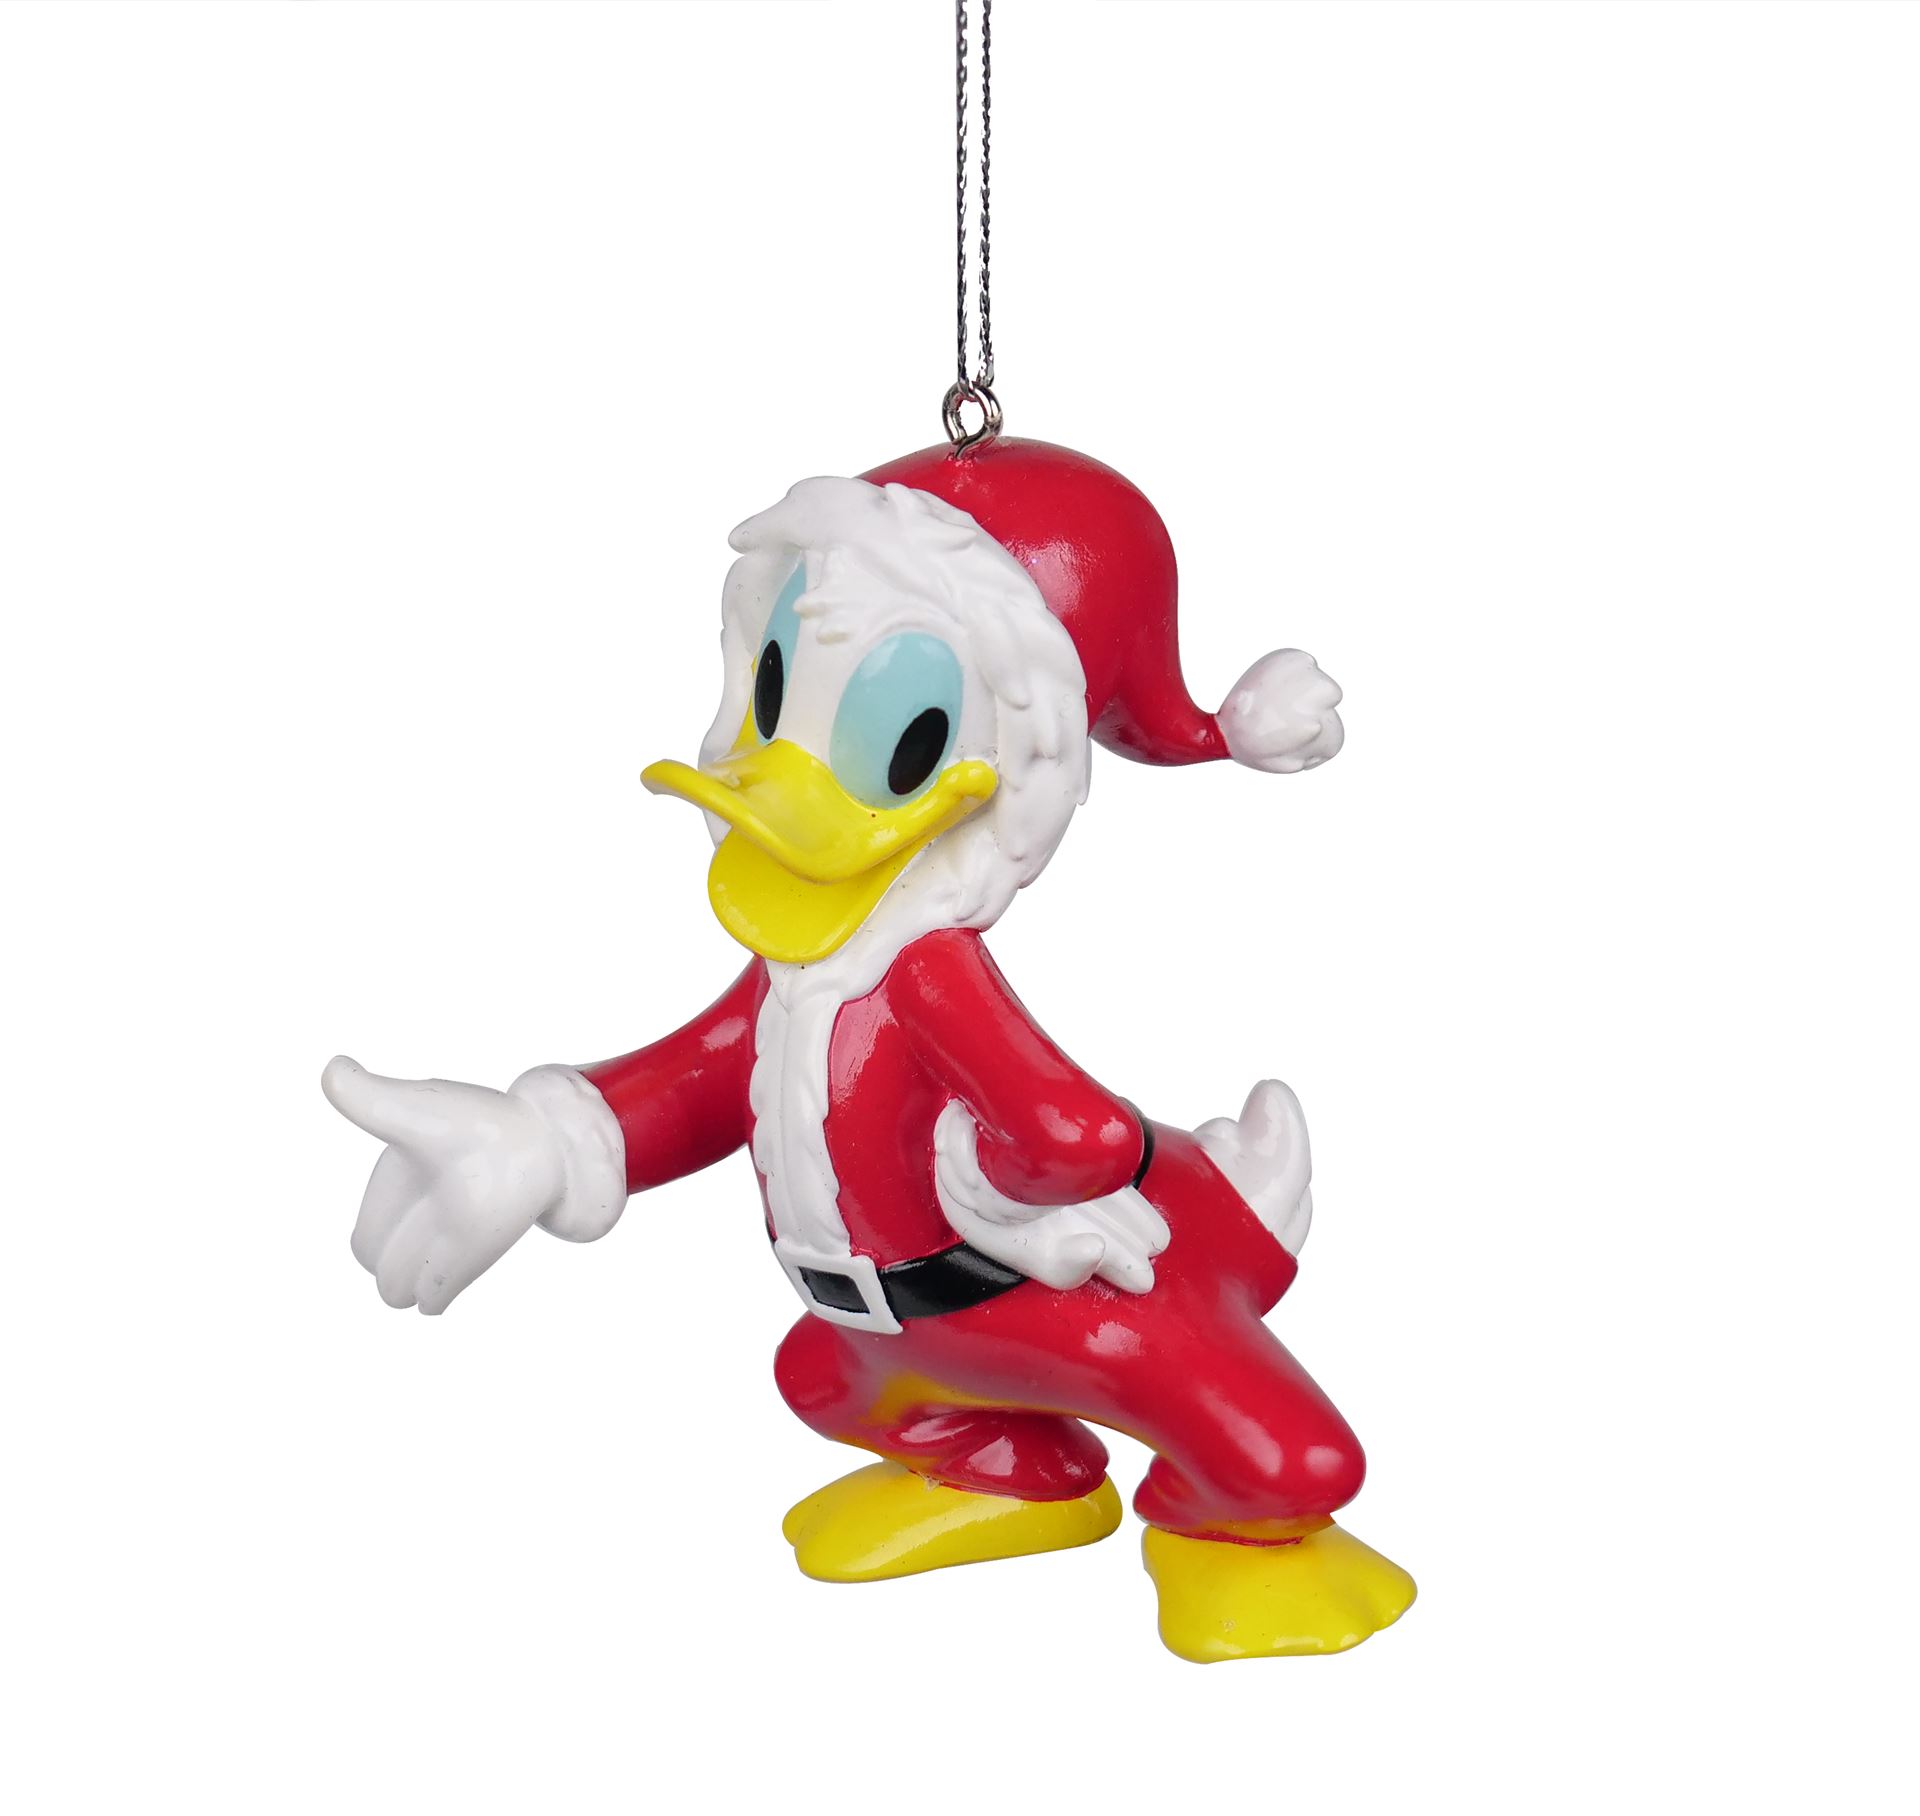 Donald-ornament-10cm